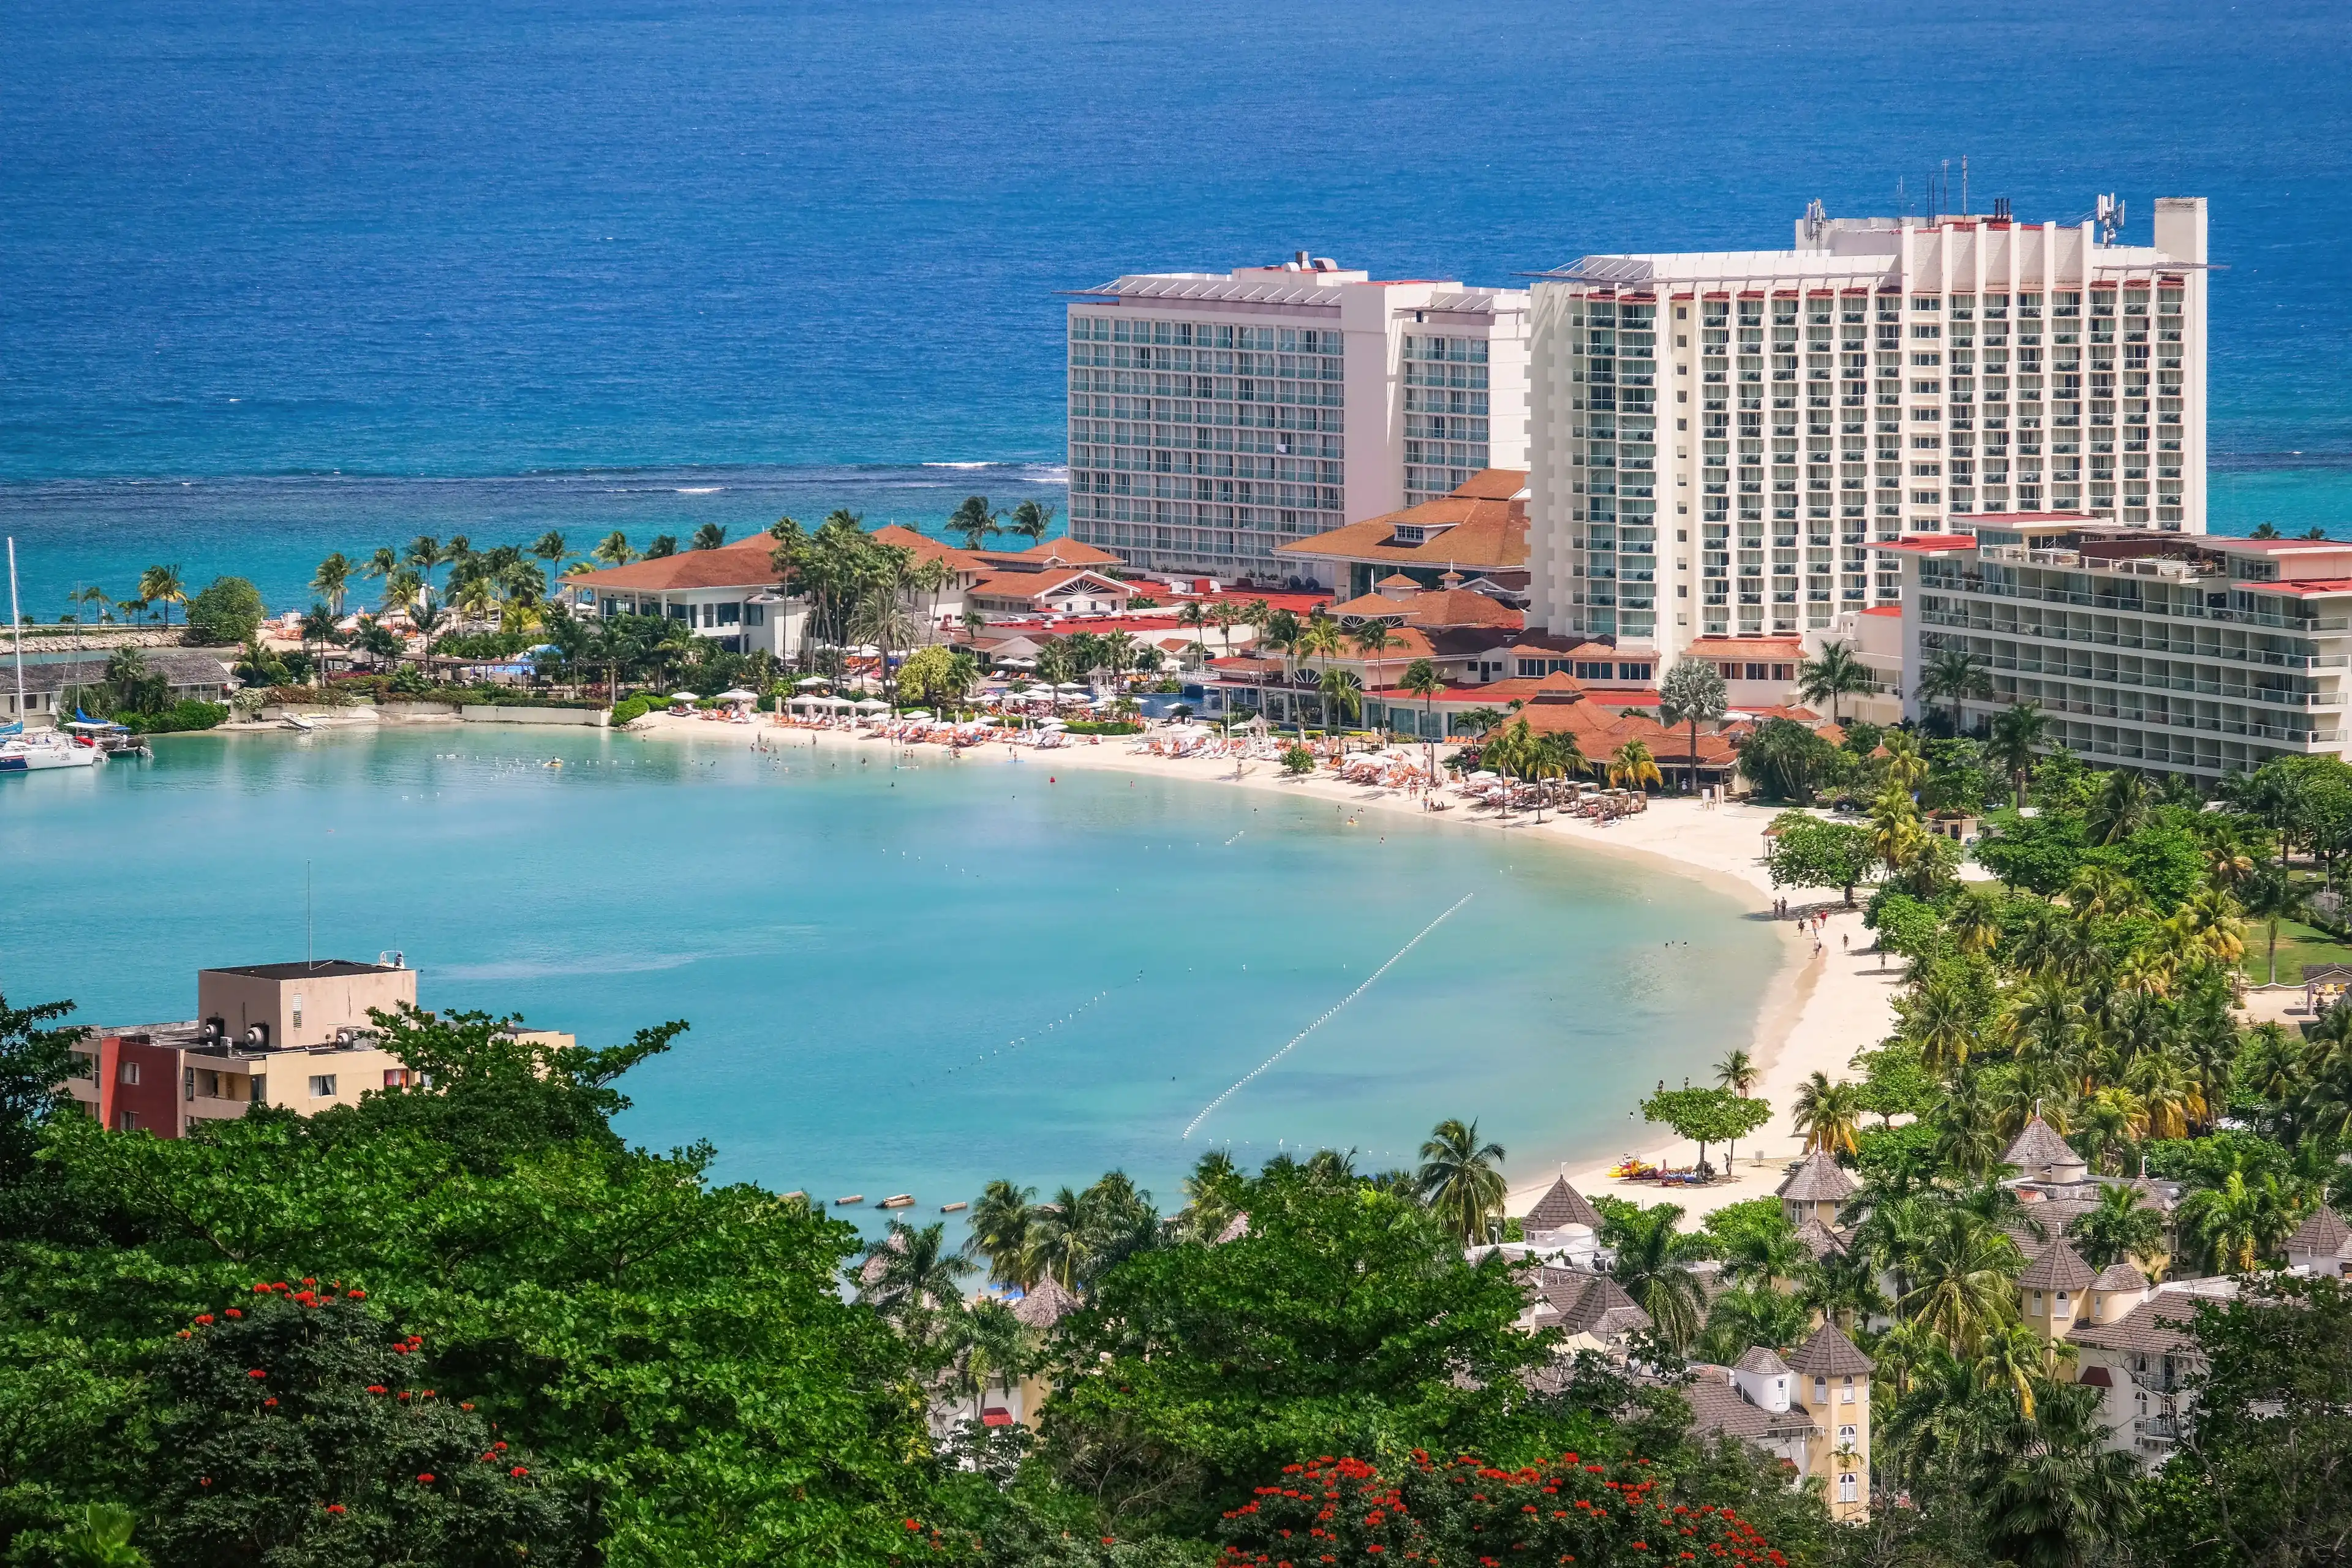 Best Ocho Rios hotels. Cheap hotels in Ocho Rios, Jamaica